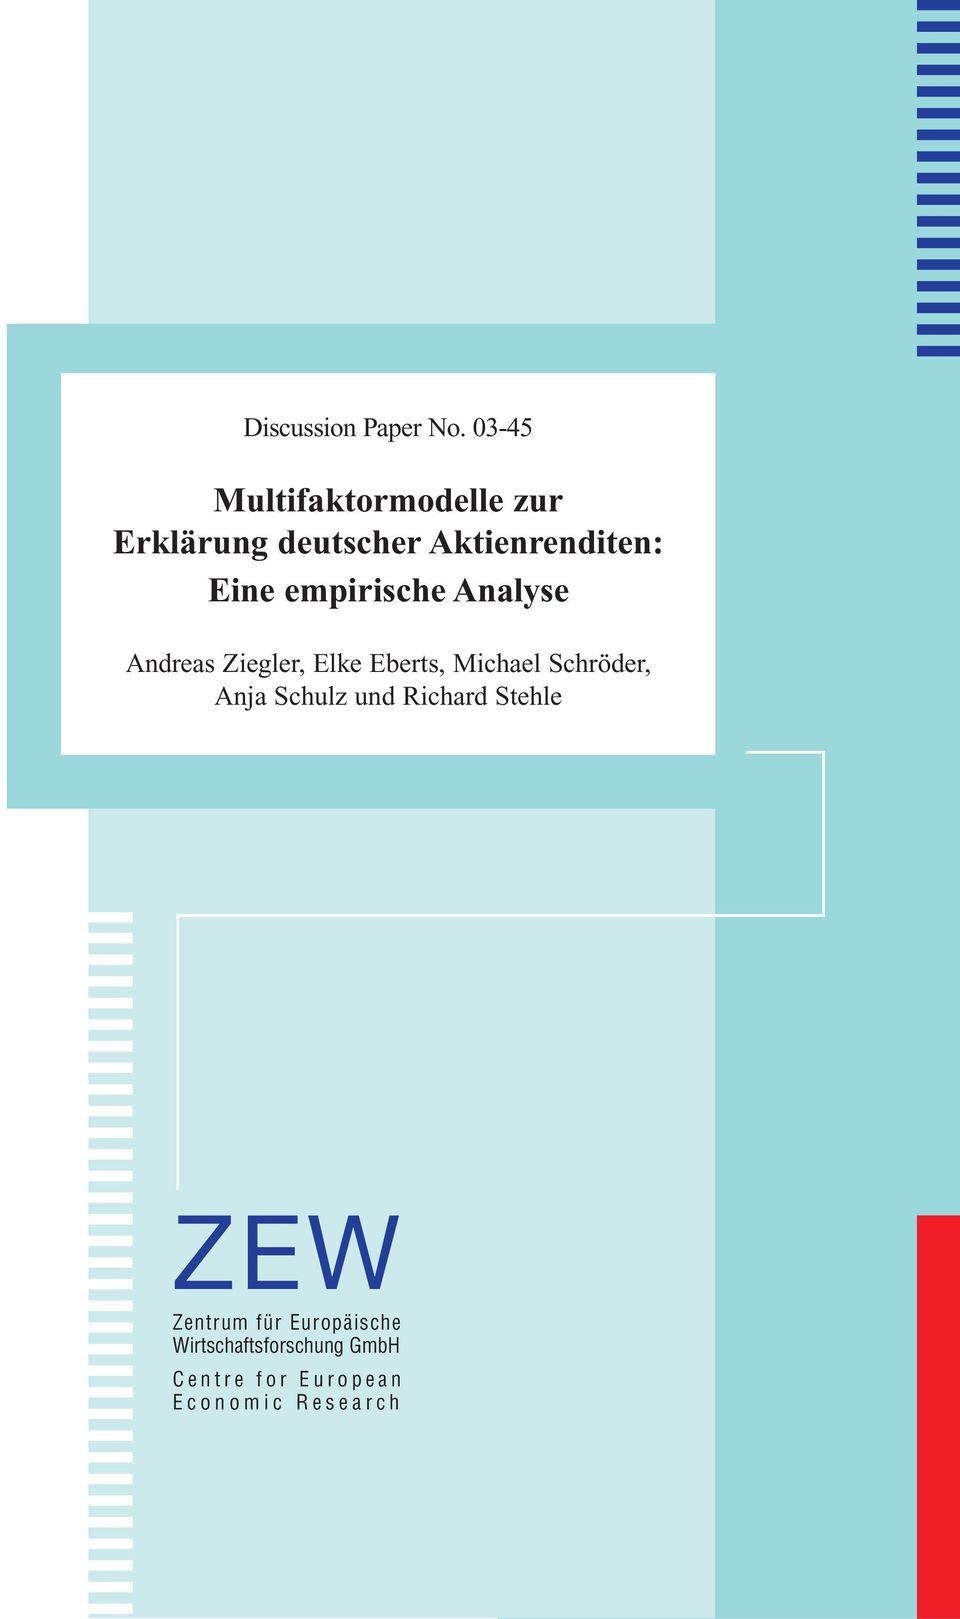 empirische Analyse Andreas Ziegler, Elke Eberts, Michael Schröder,